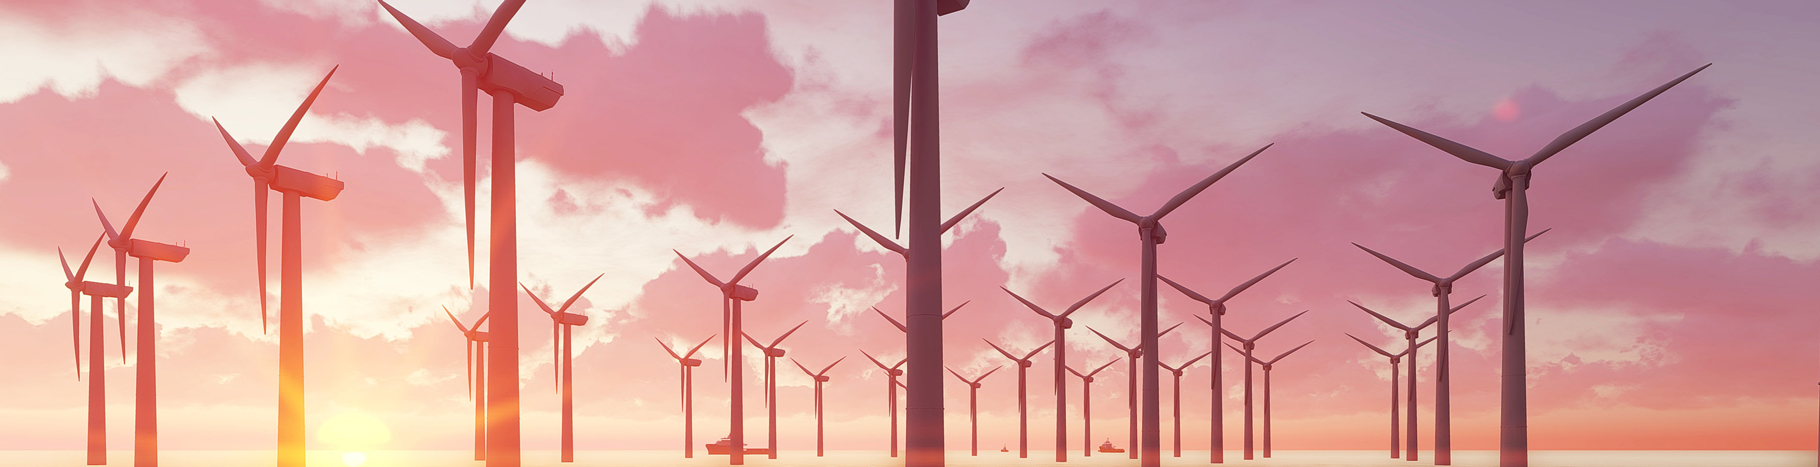 A sea of wind turbines at sunset